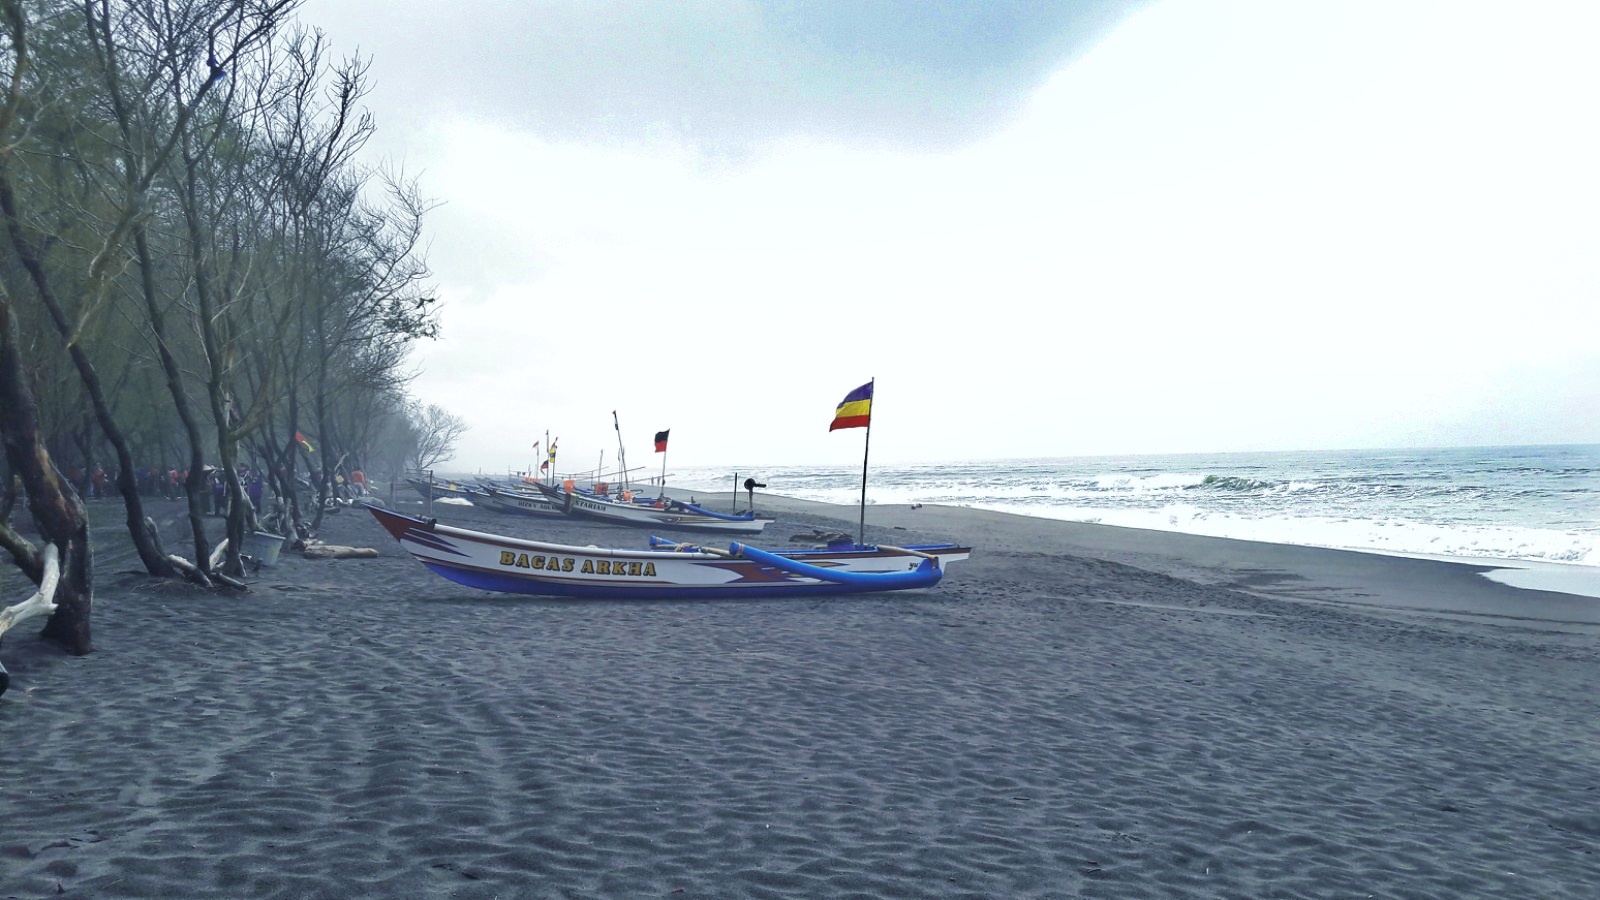 Pantai Baru Bantul (Annissa Saputri)